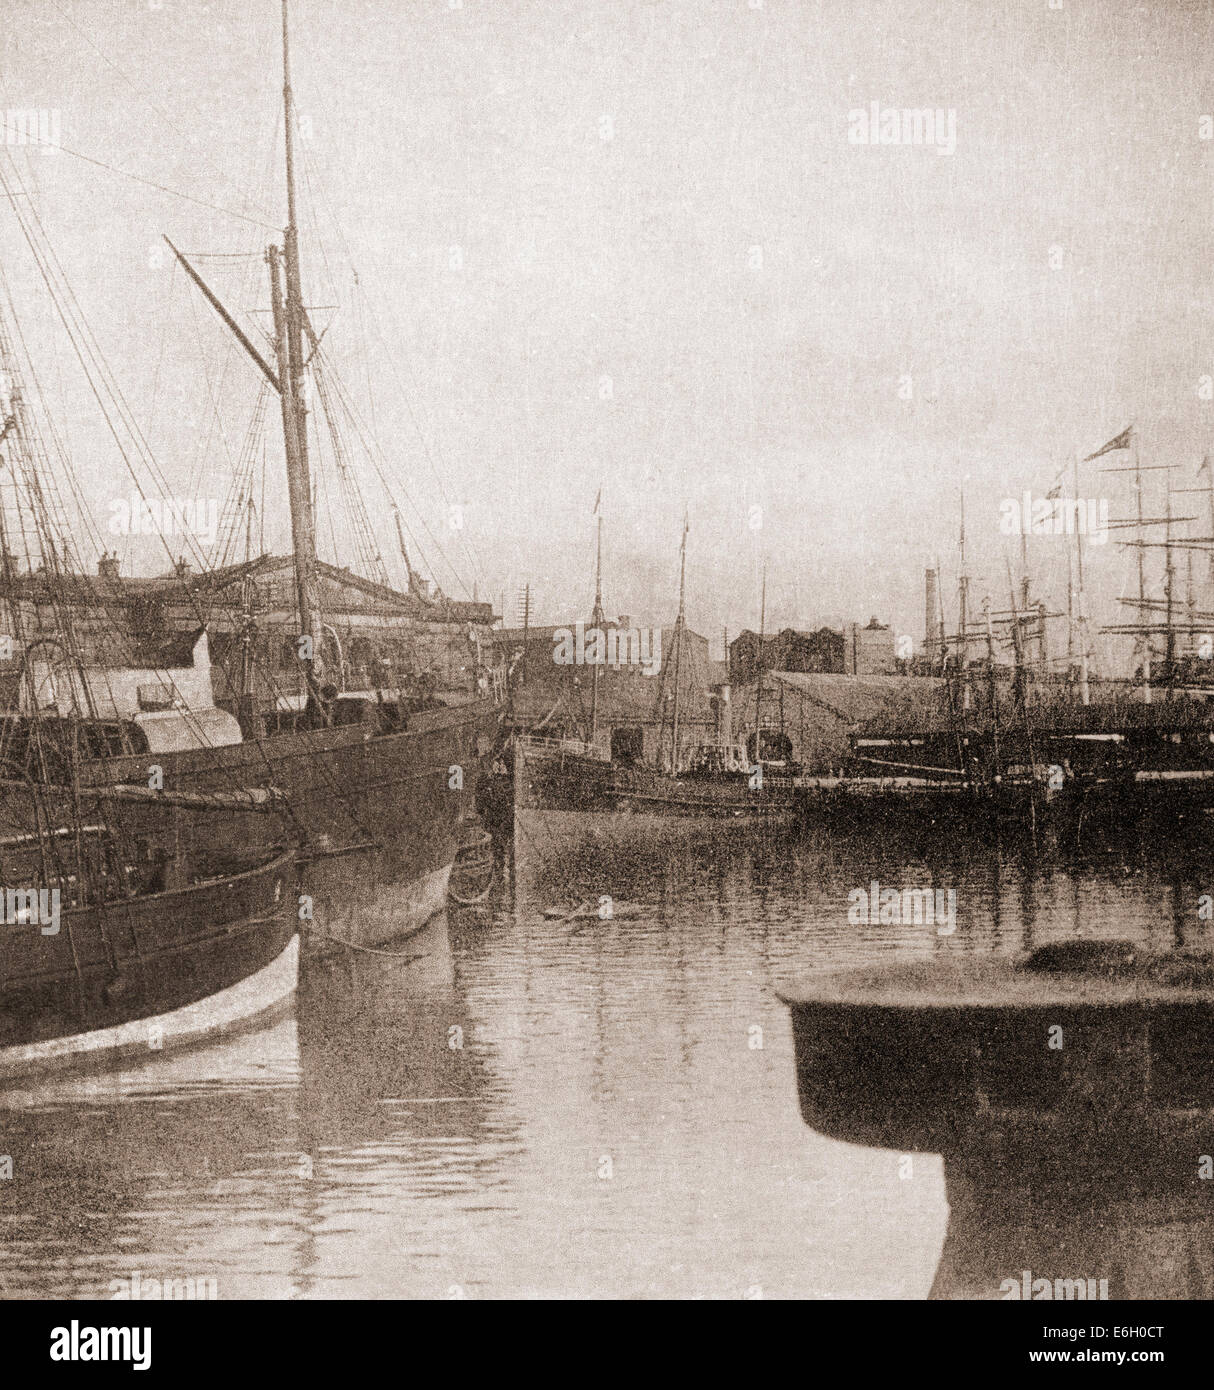 Ships in Salthouse Docks, Liverpool, c. 1900, England, UK Stock Photo